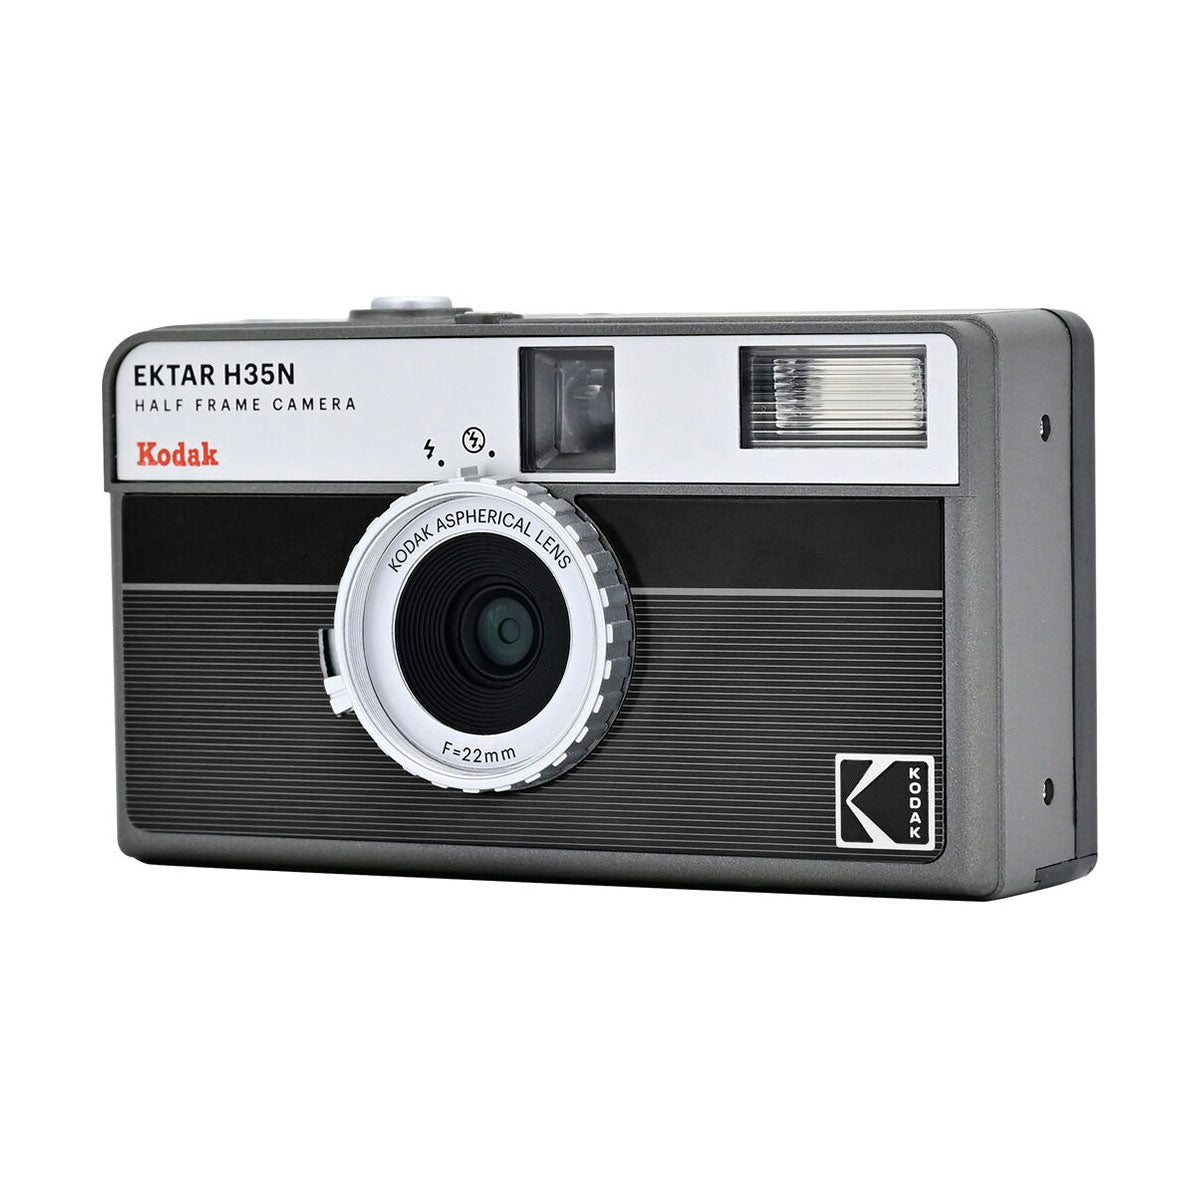 Kodak H35N 1/2 Frame Film Camera - Black